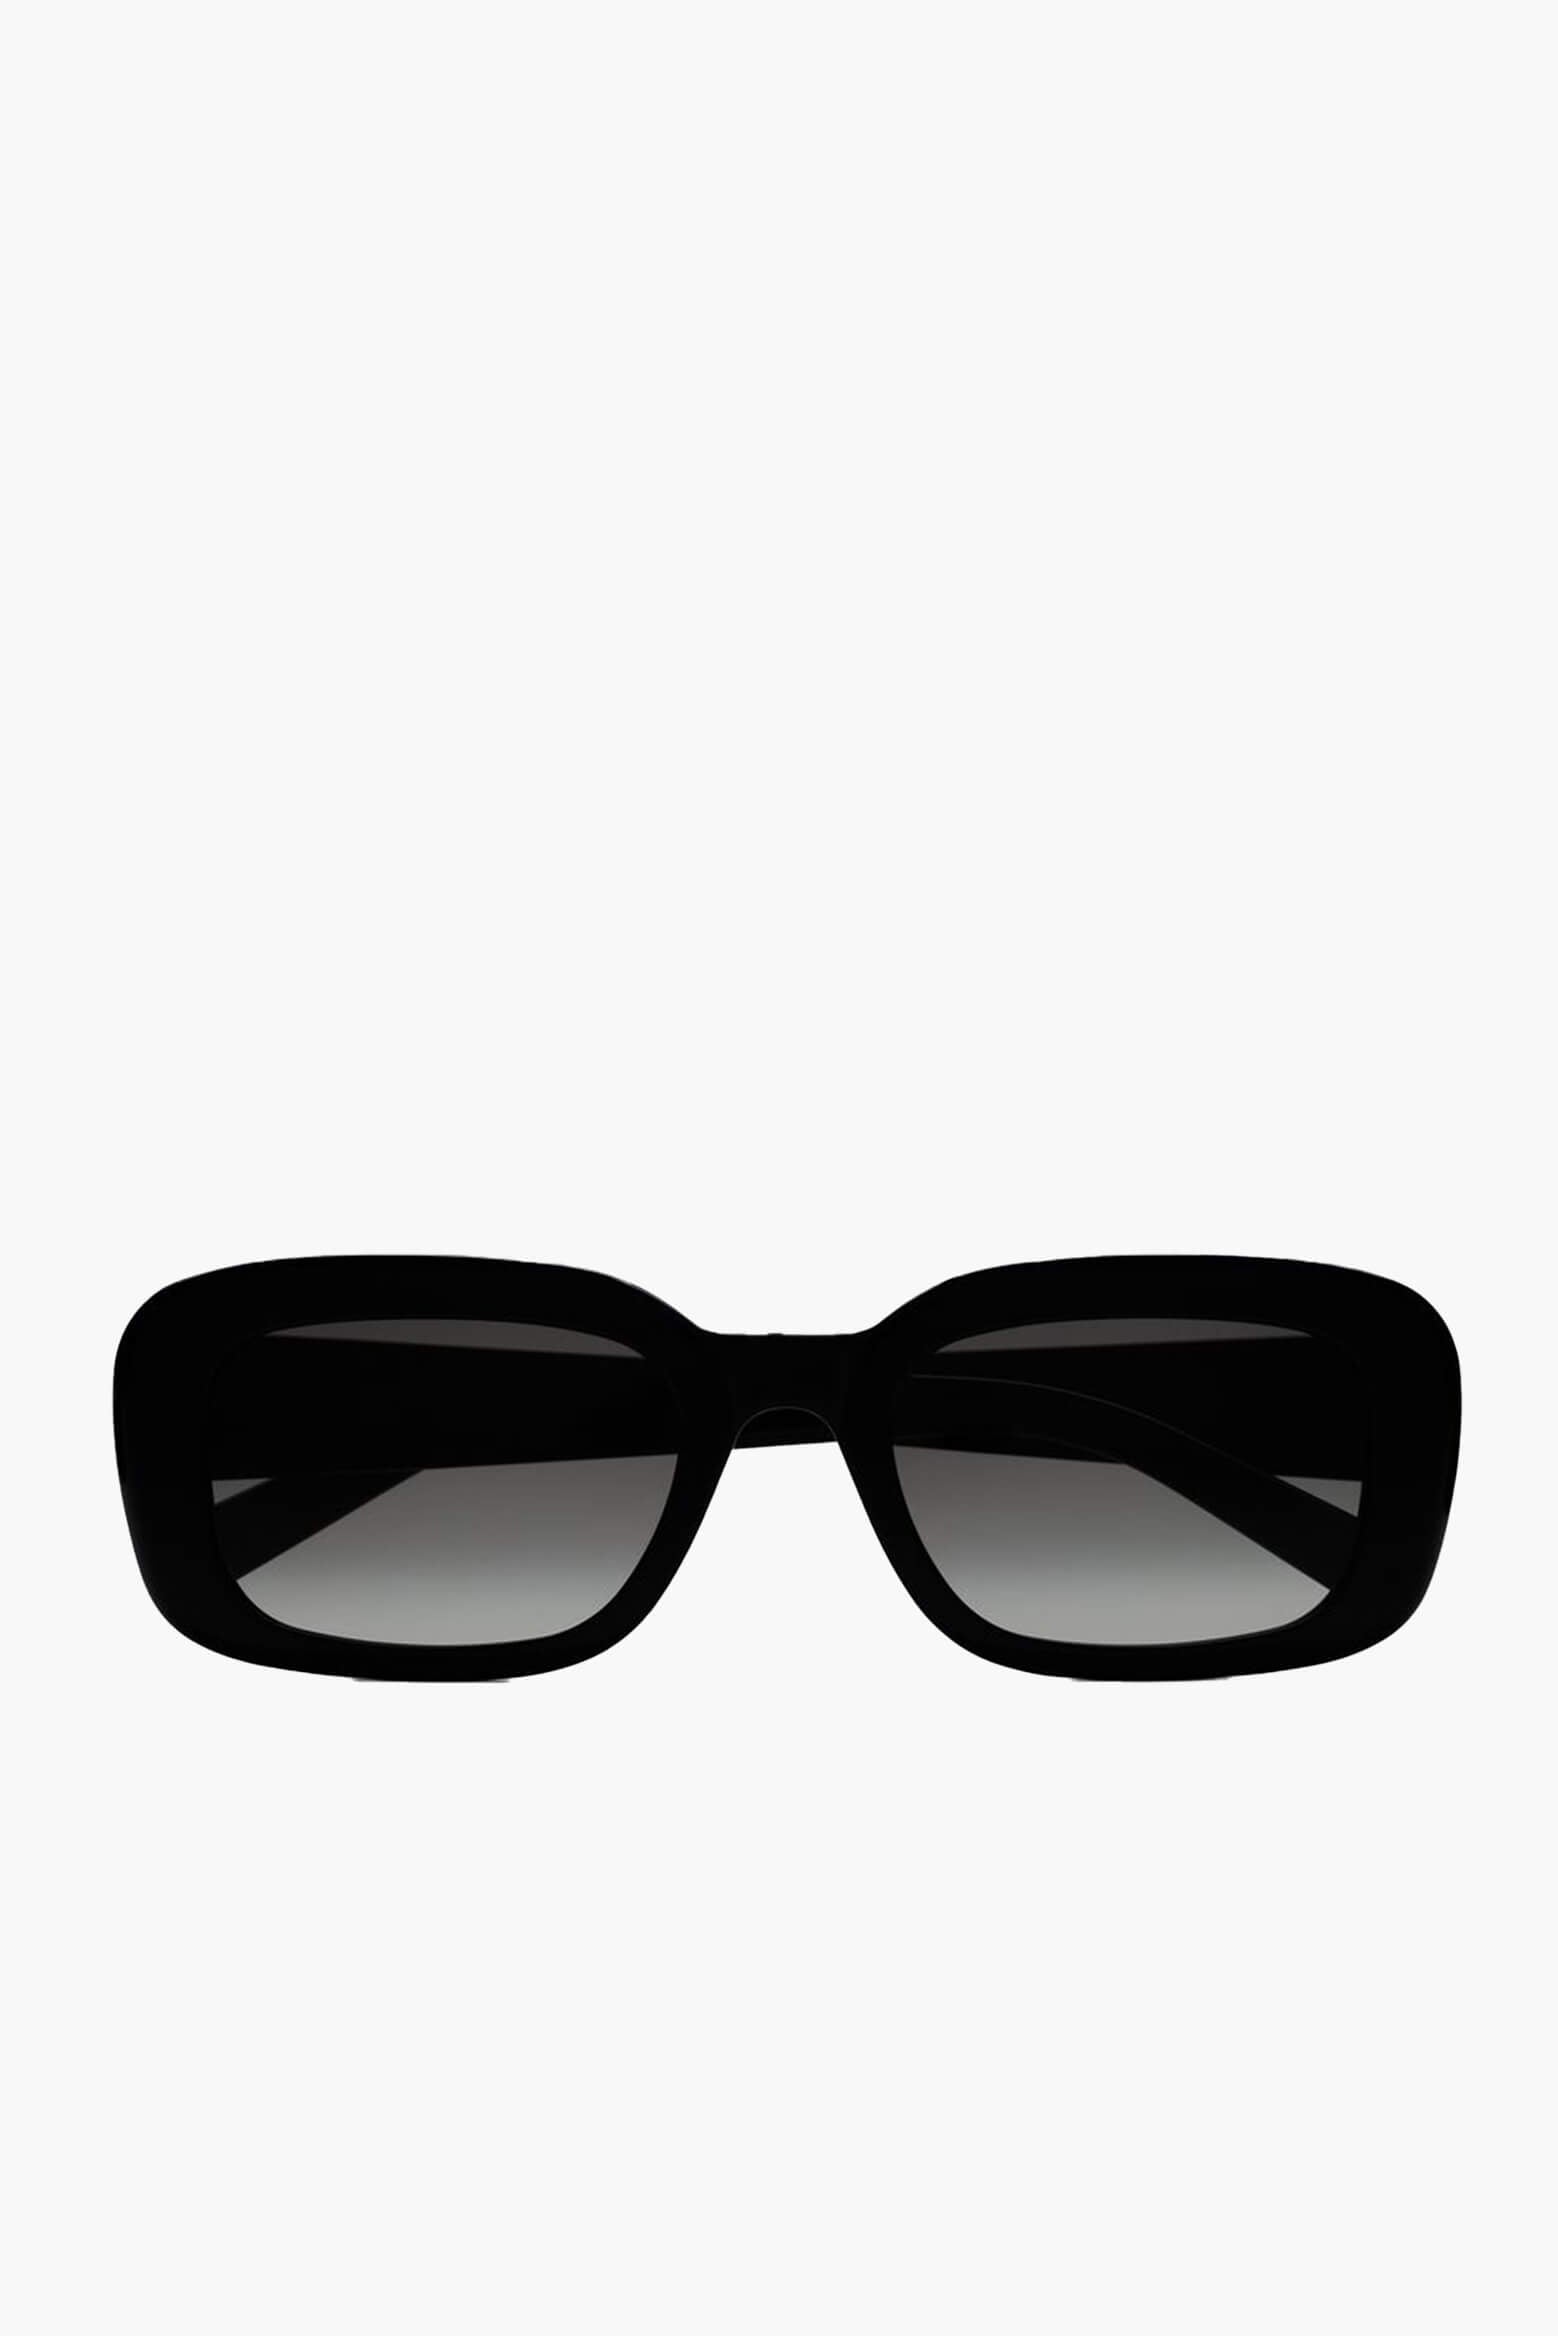 Saint Laurent Pillowed Rectangular Sunglasses in Black available at The New Trend Australia.